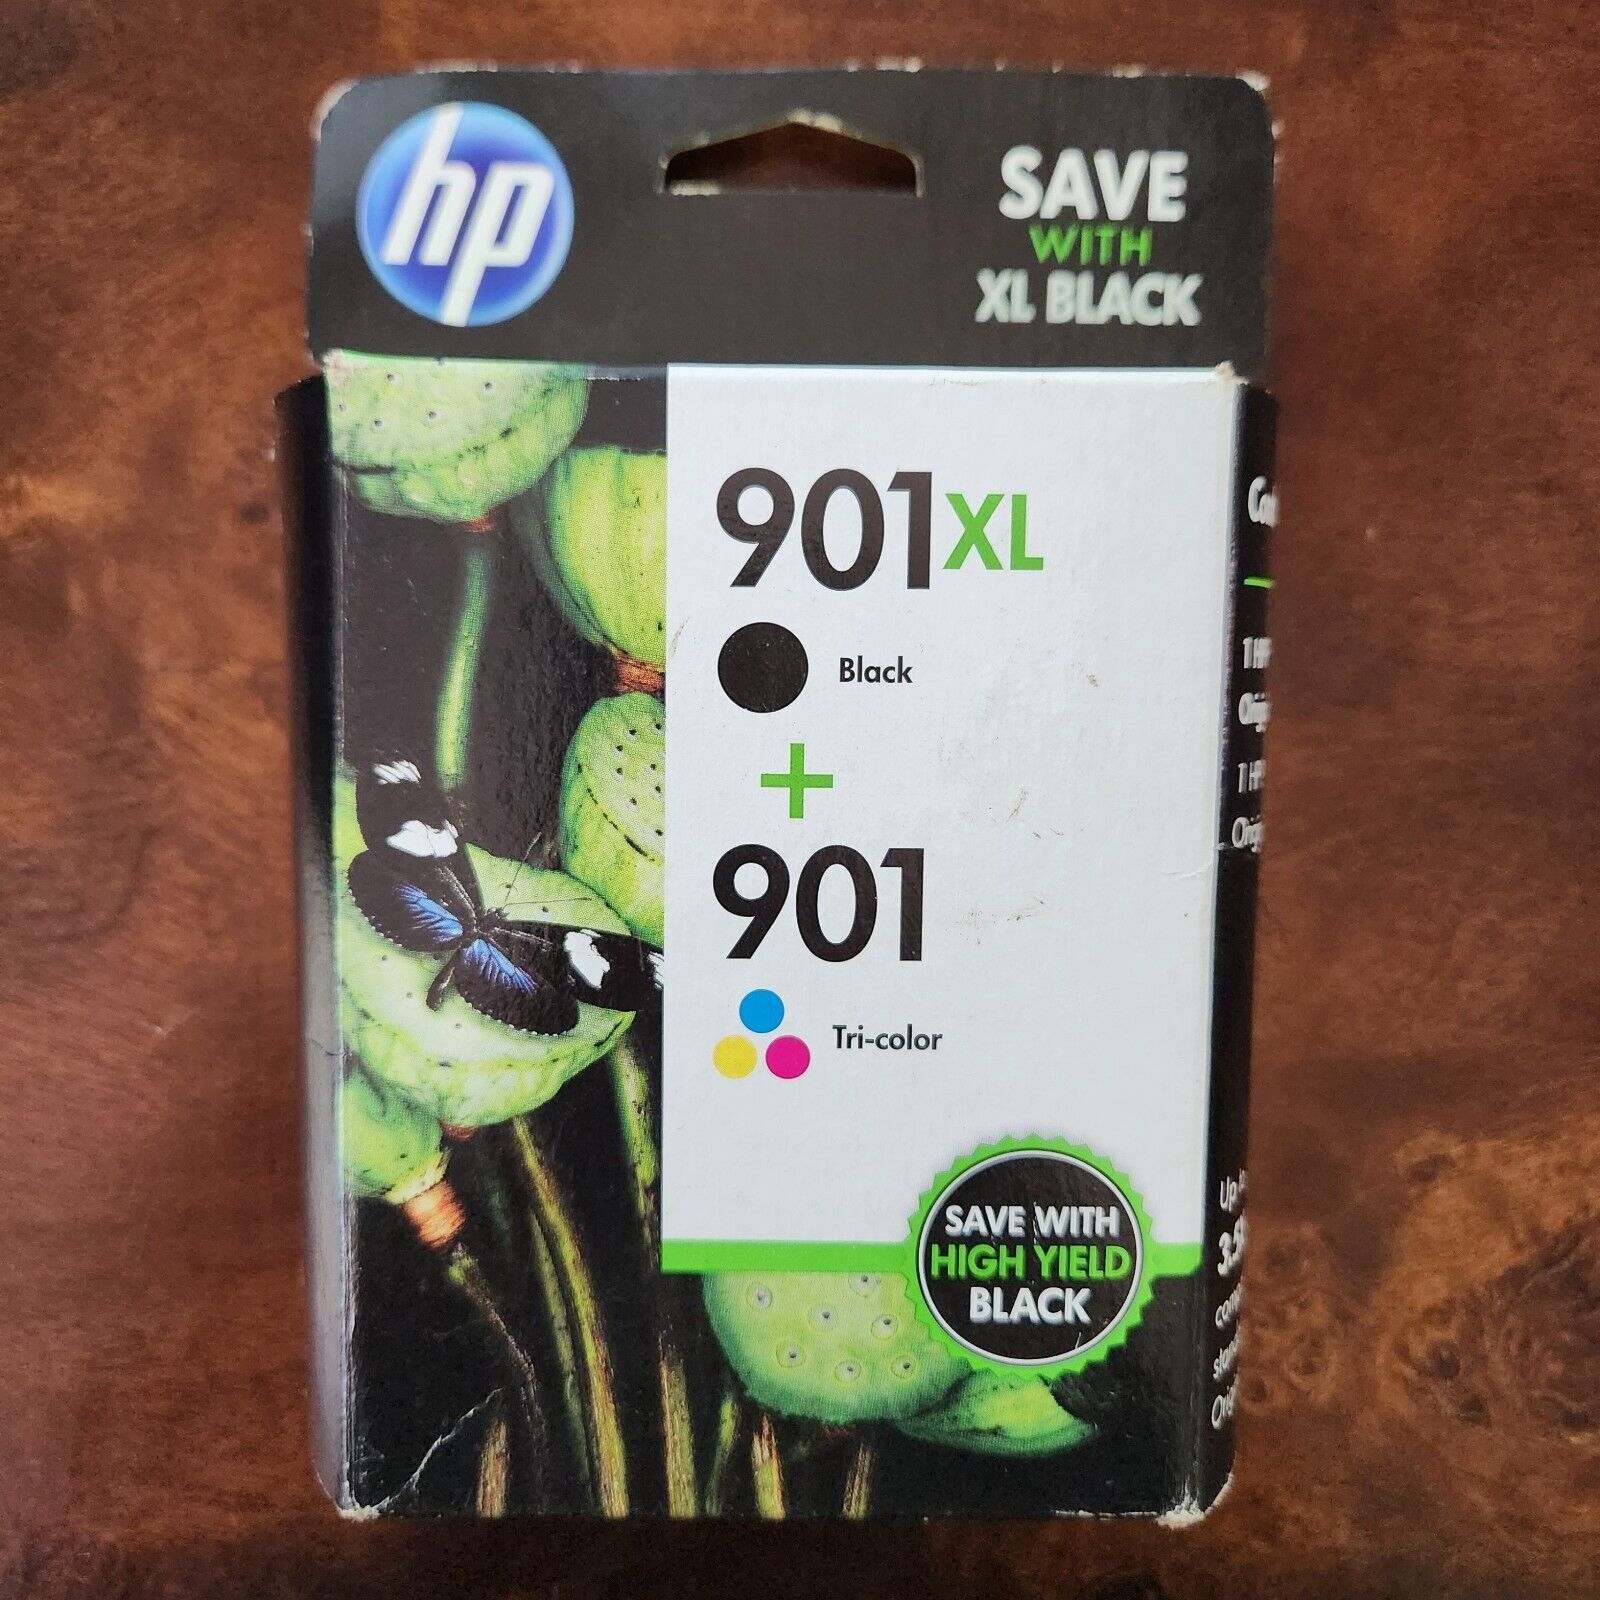 HP 901 Black 901 XL & Tri-Color Standard Cartridge CZ722FN Expired April 2019